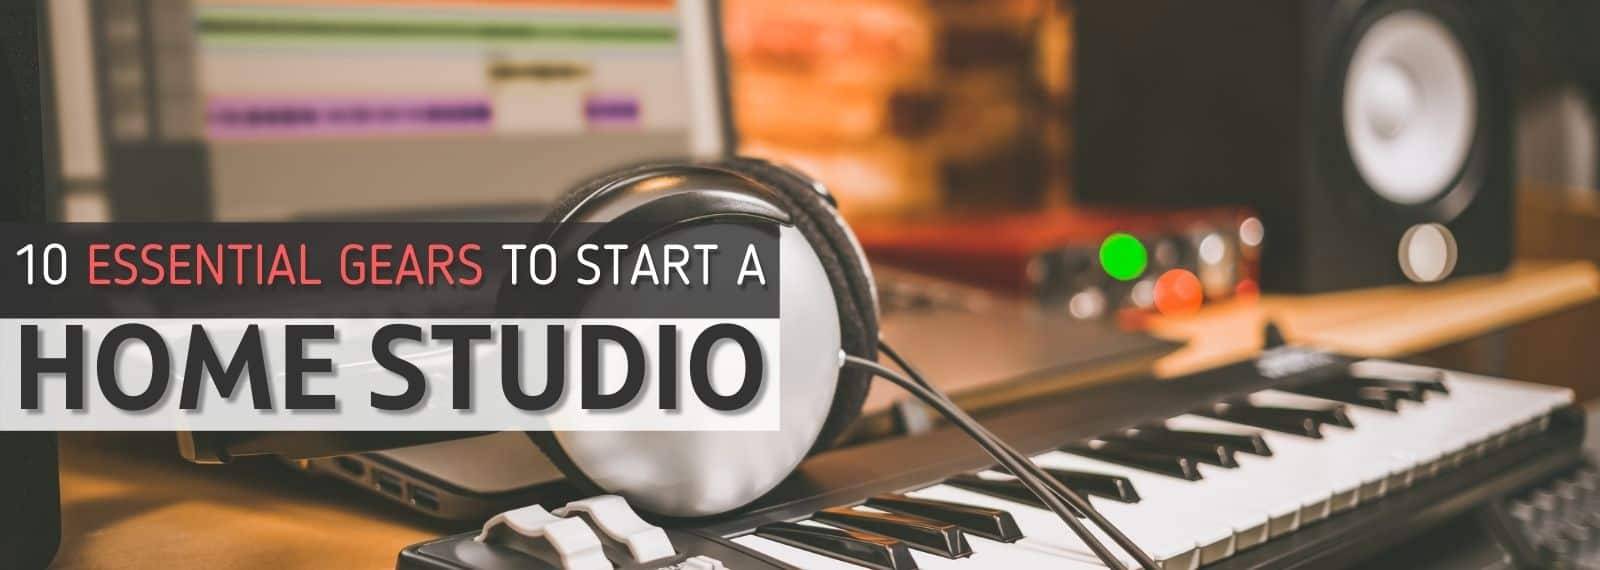 10 Essential Gear To Start Home Studio